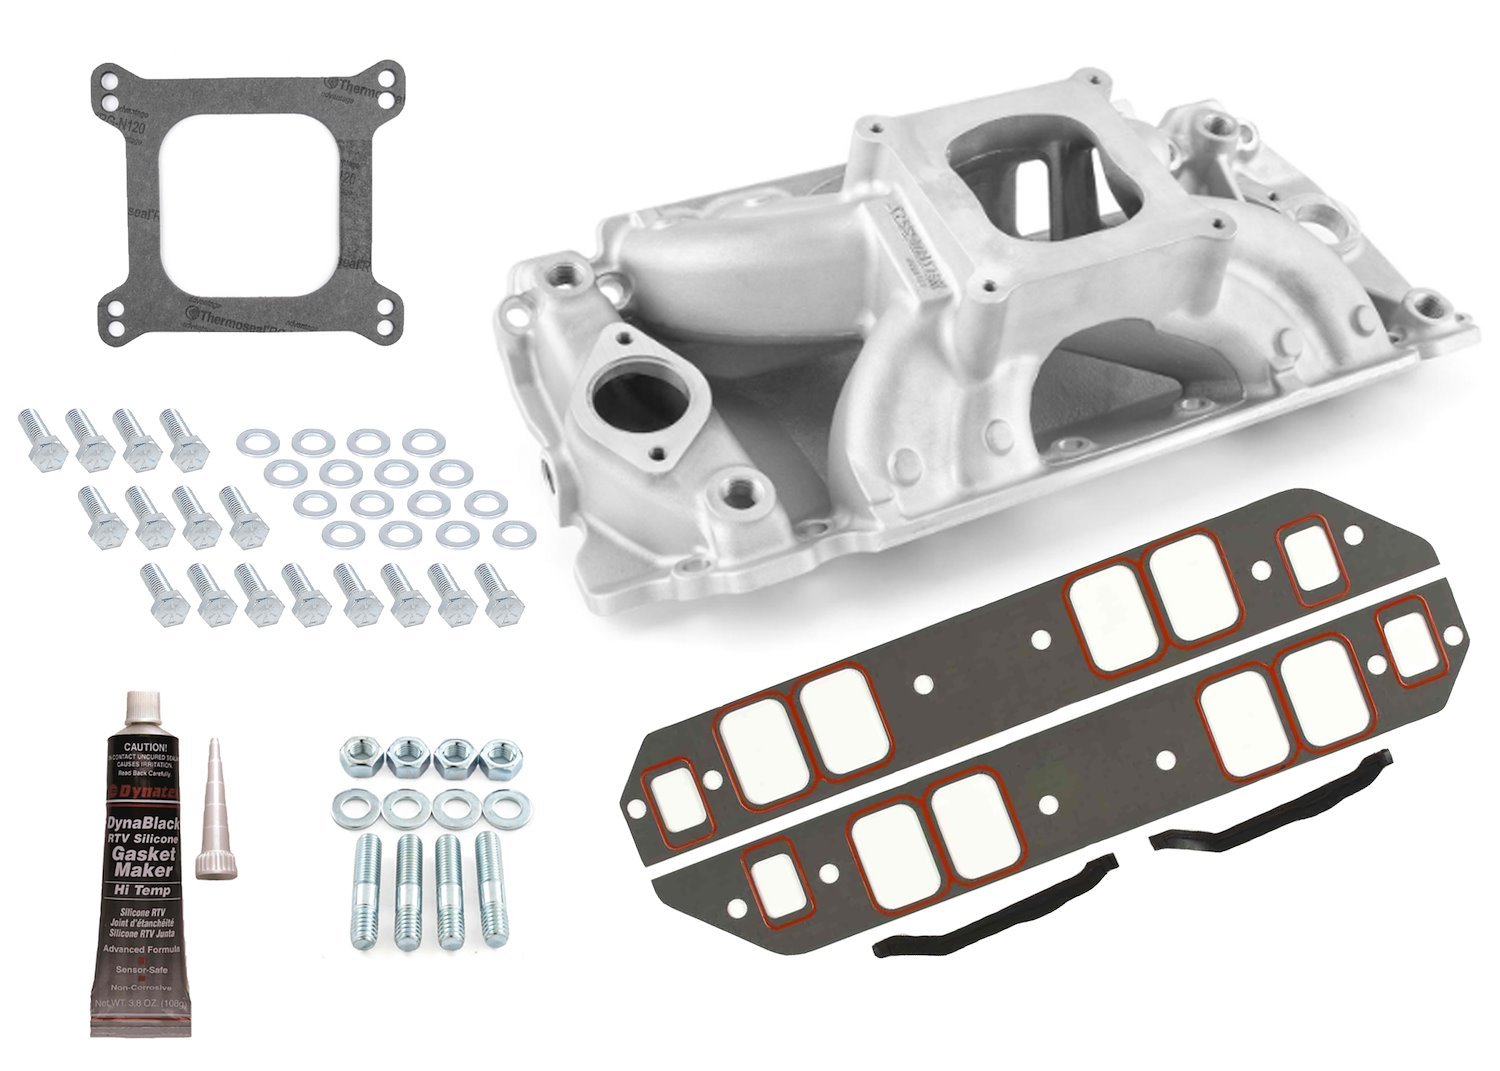 1-147-022 High Rise Intake Manifold Kit for Big Block Chevy 454 ci, Rectangle Port - Satin Finish